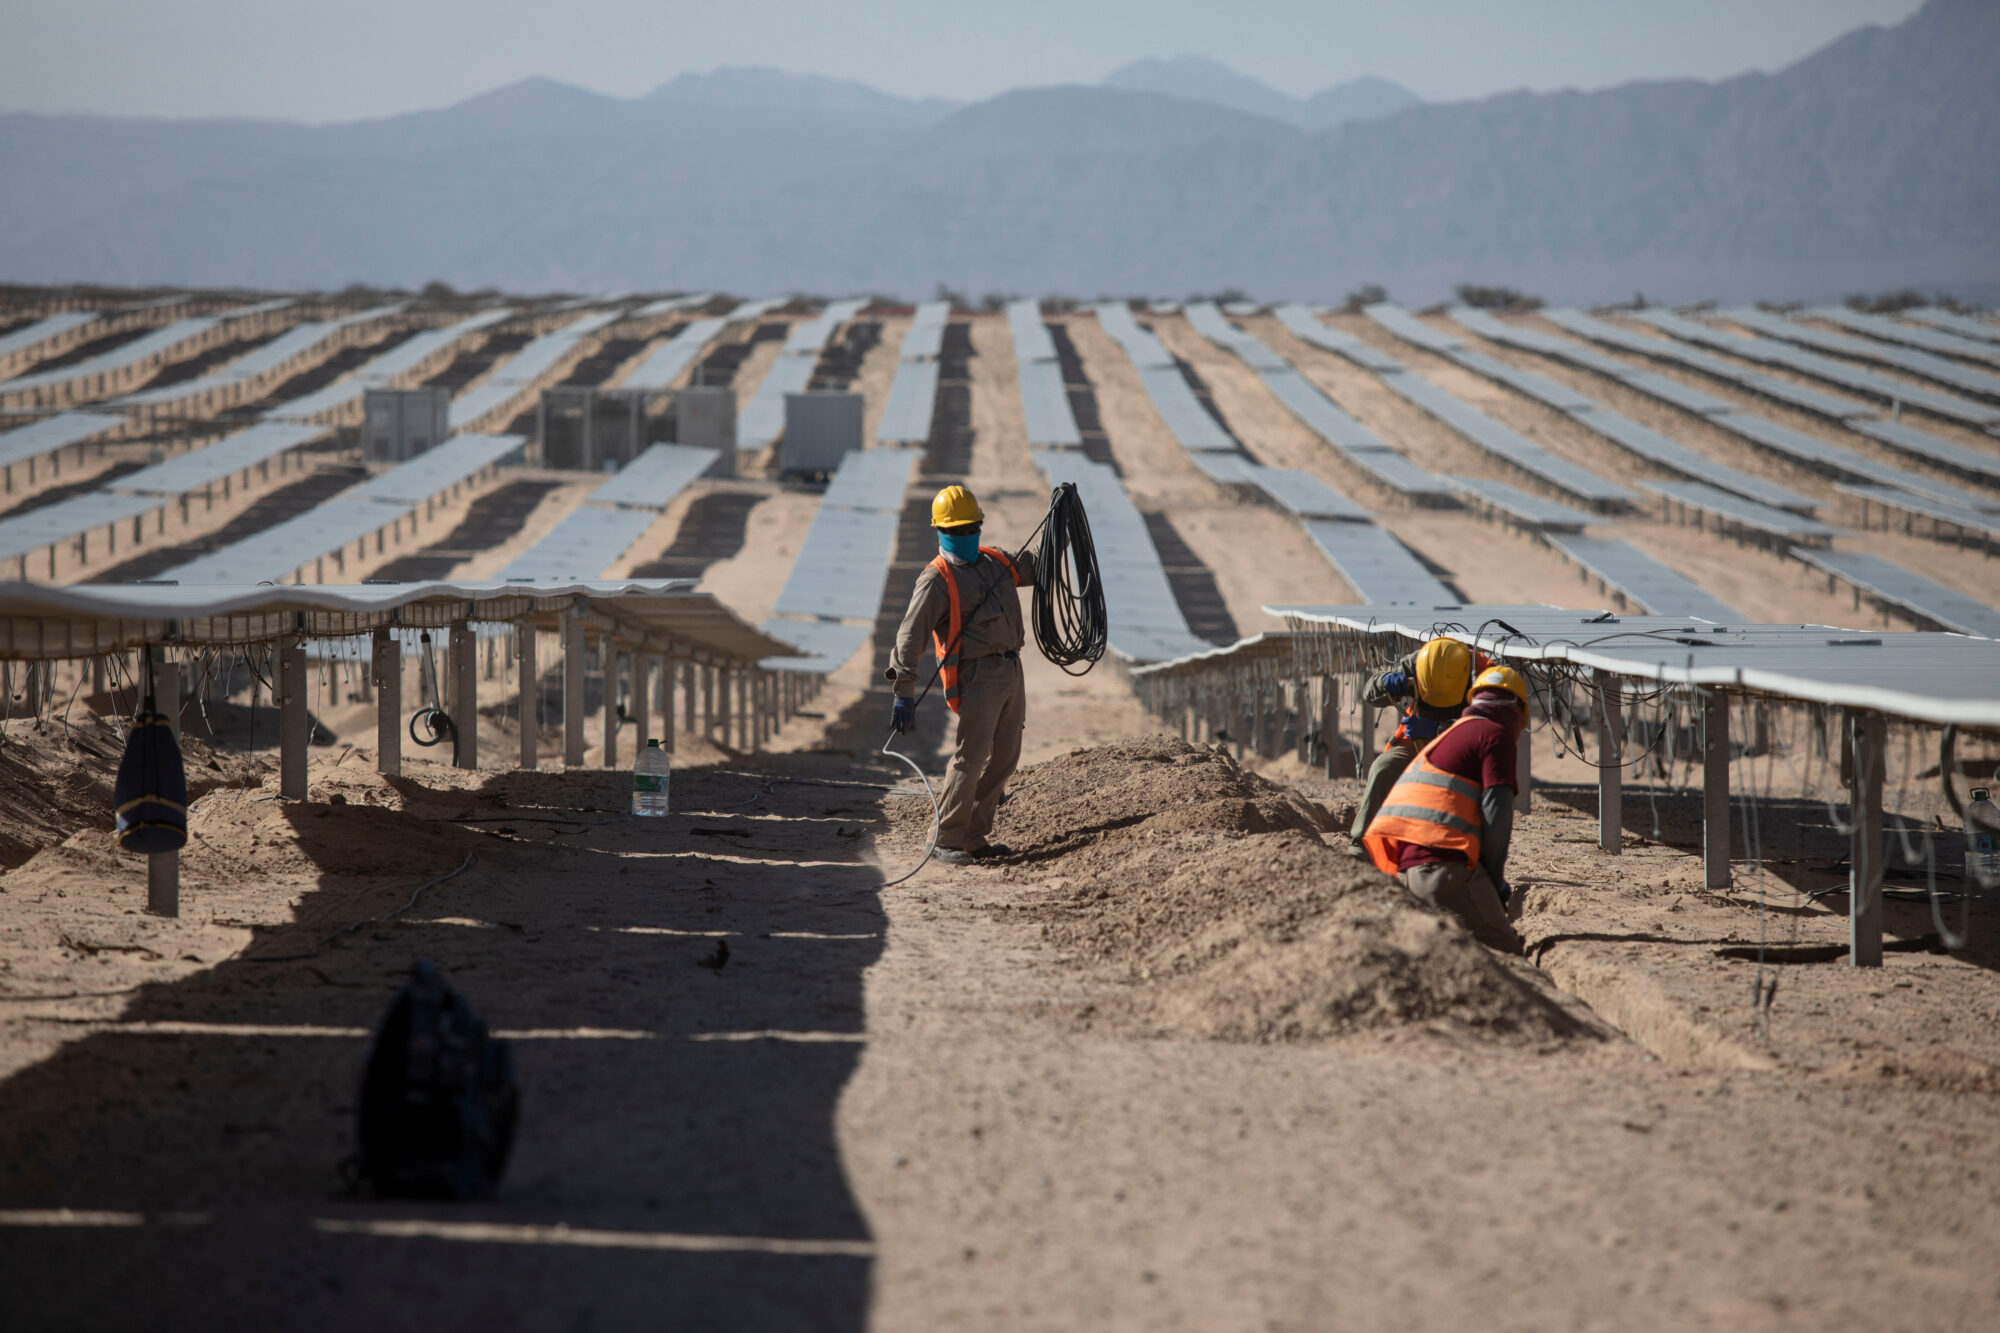 People working in solar panels in Cafayate, Salta, Argentina